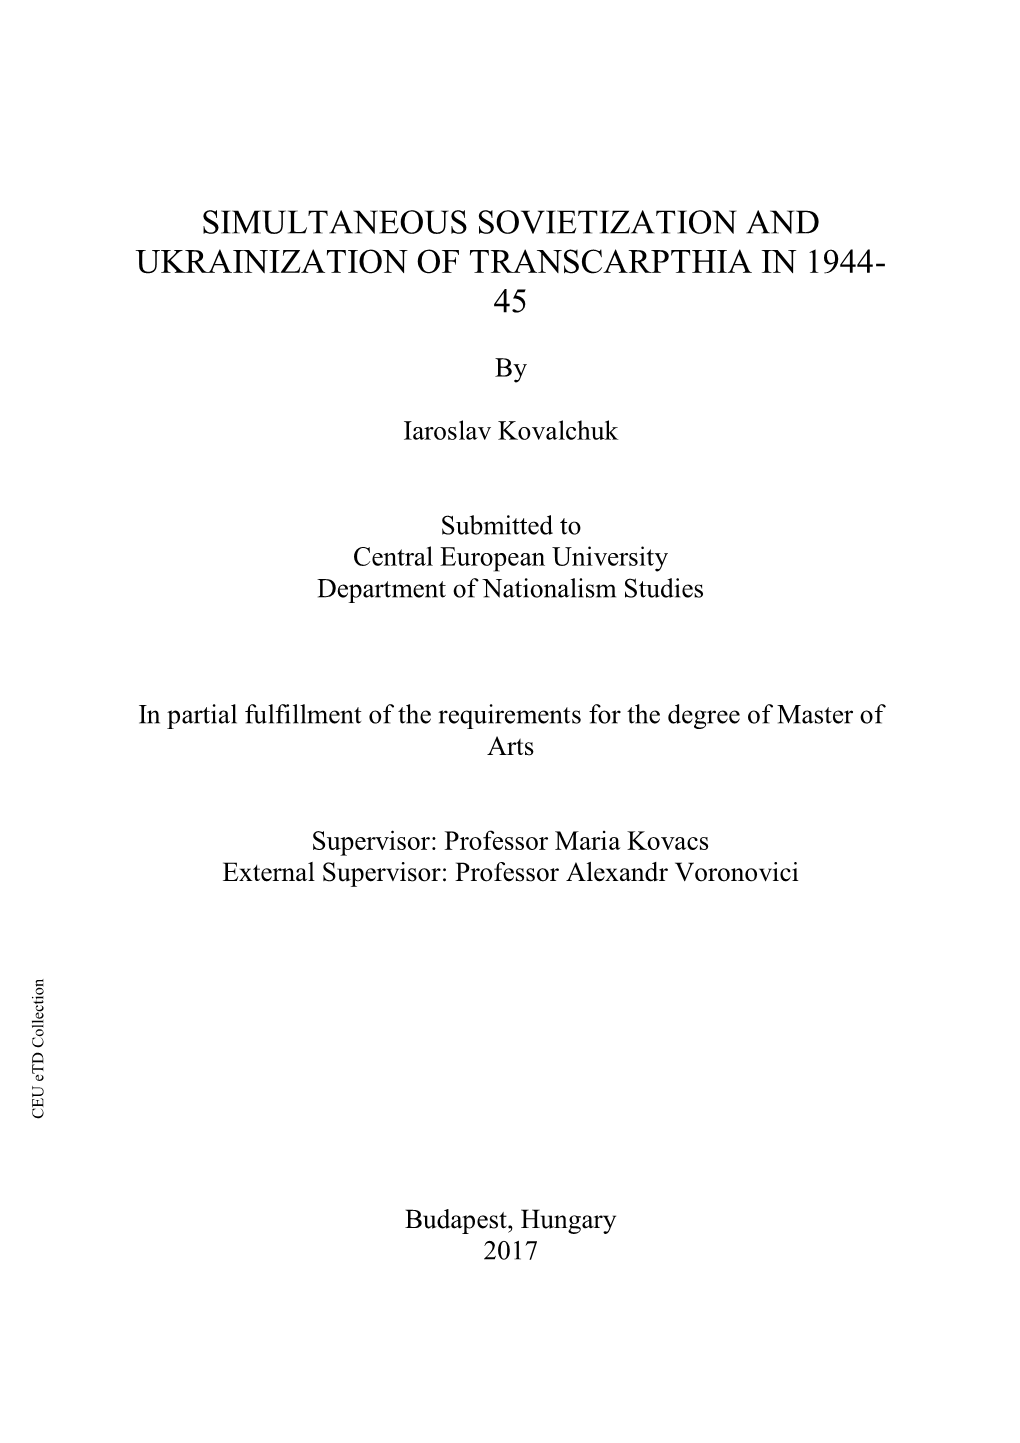 Simultaneous Sovietization and Ukrainization of Transcarpthia in 1944- 45